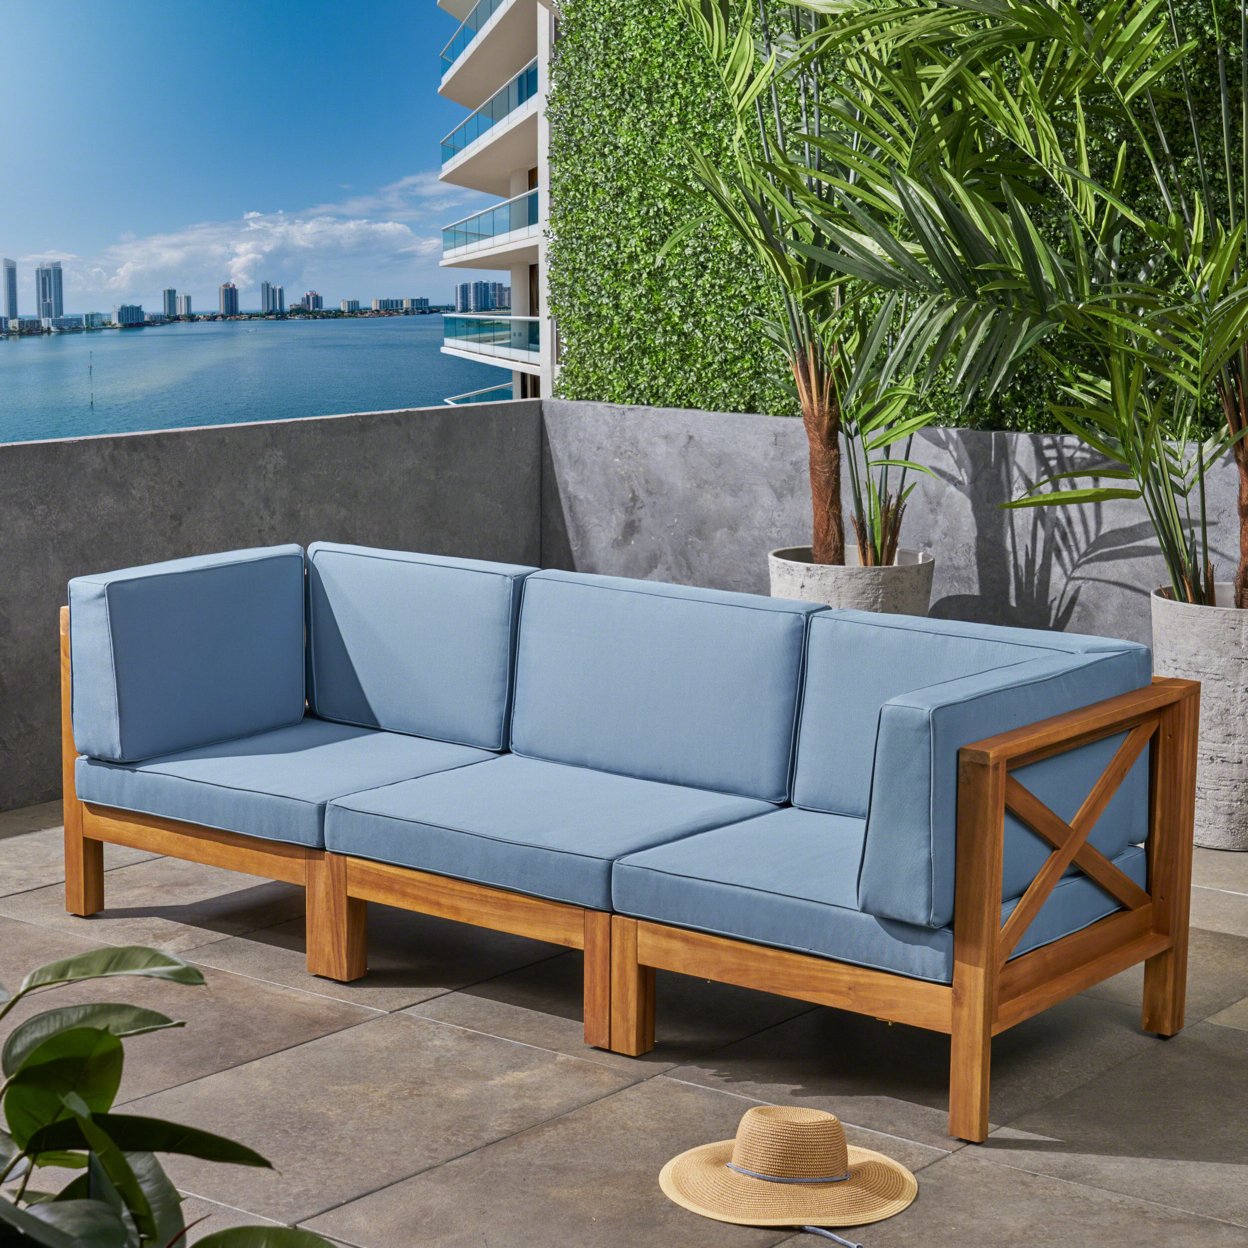 Brava Outdoor Modular Acacia Wood Sofa With Cushions - Teak Finish + Blue